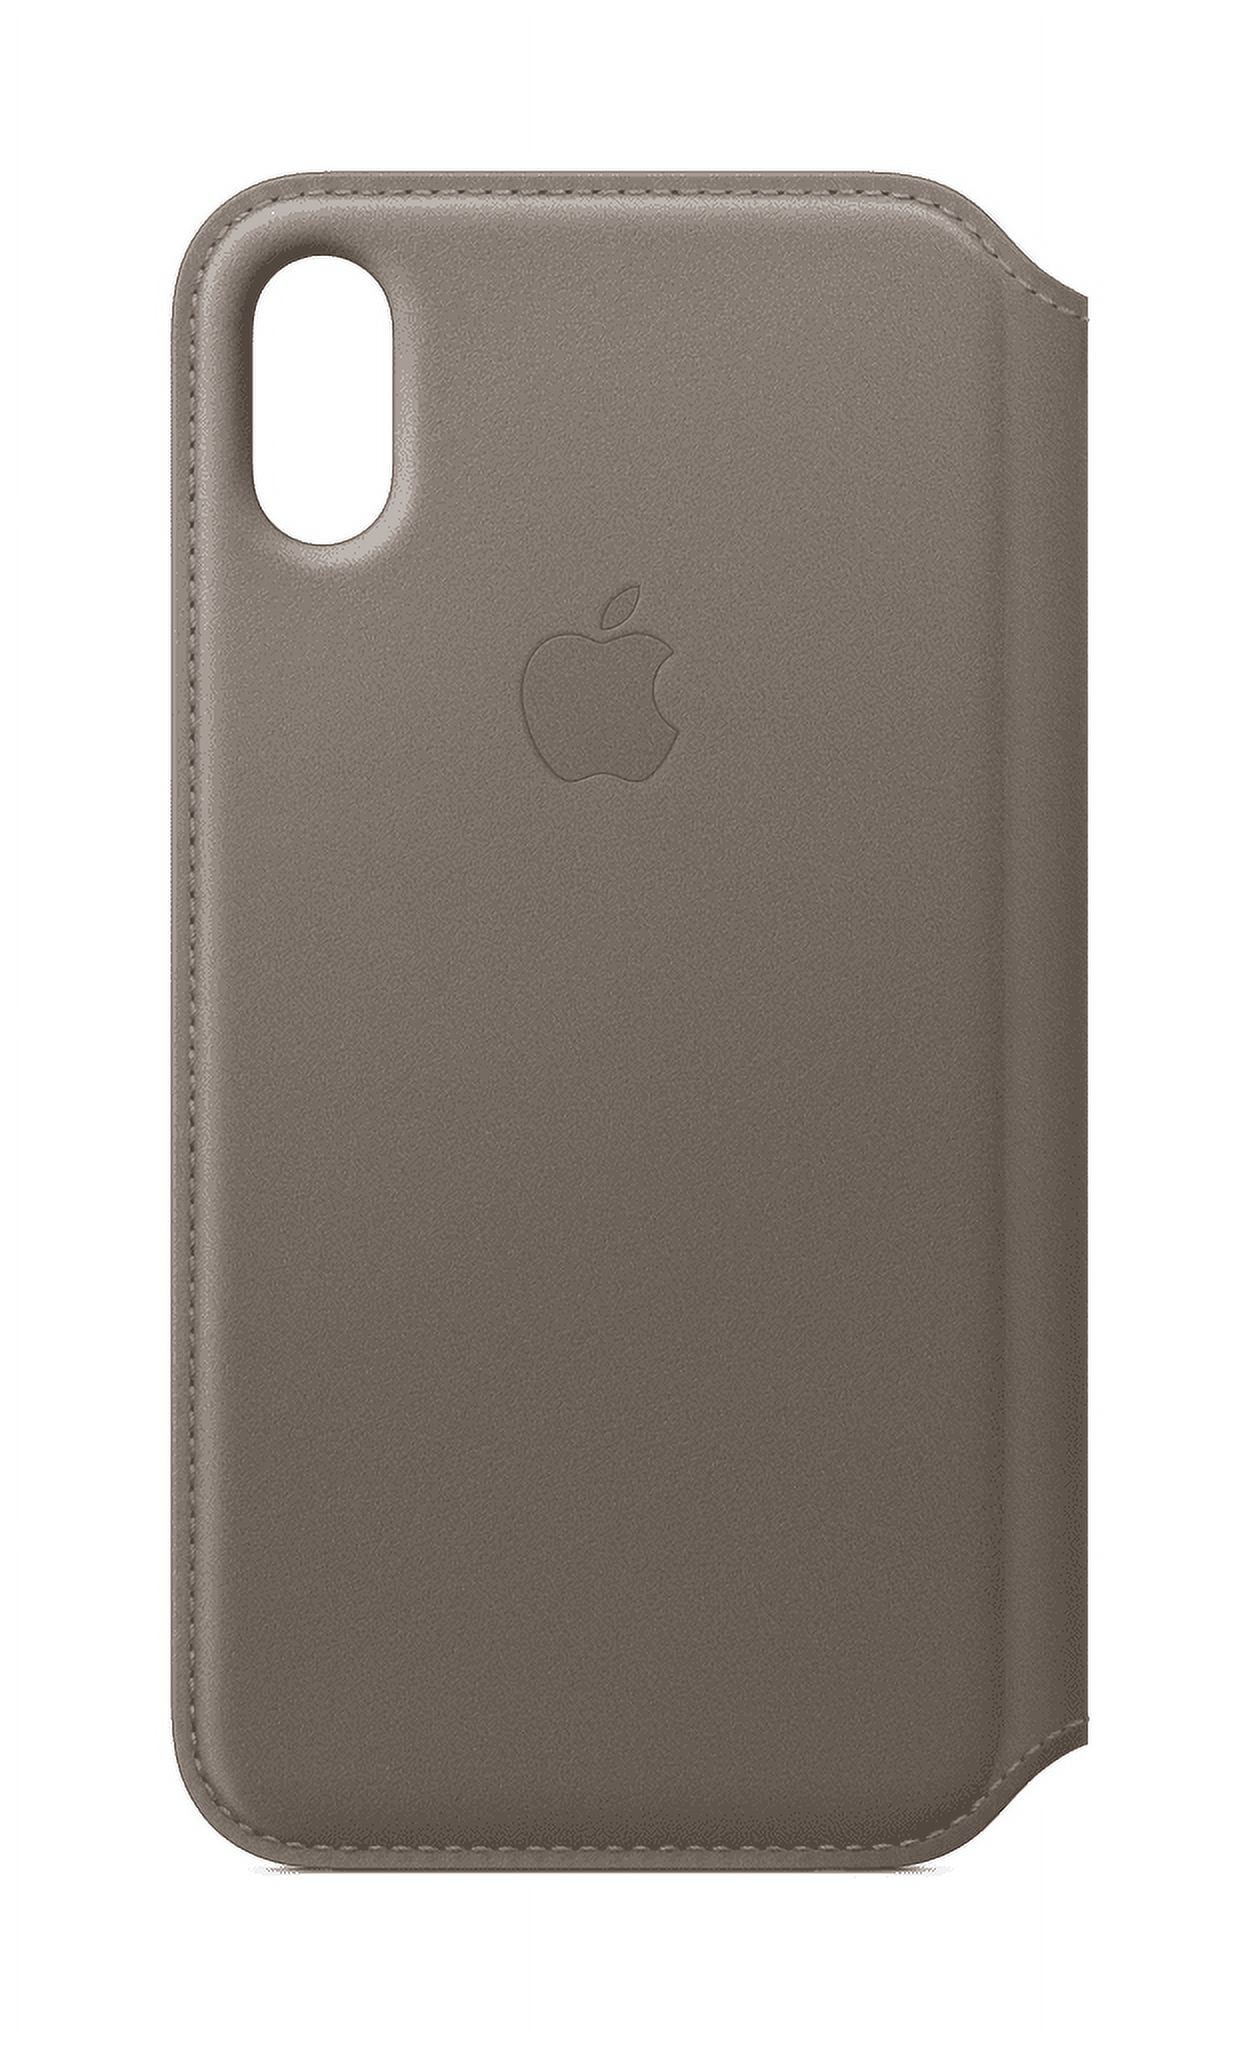 Apple Carrying Case (Folio) Apple iPhone X Smartphone, Black